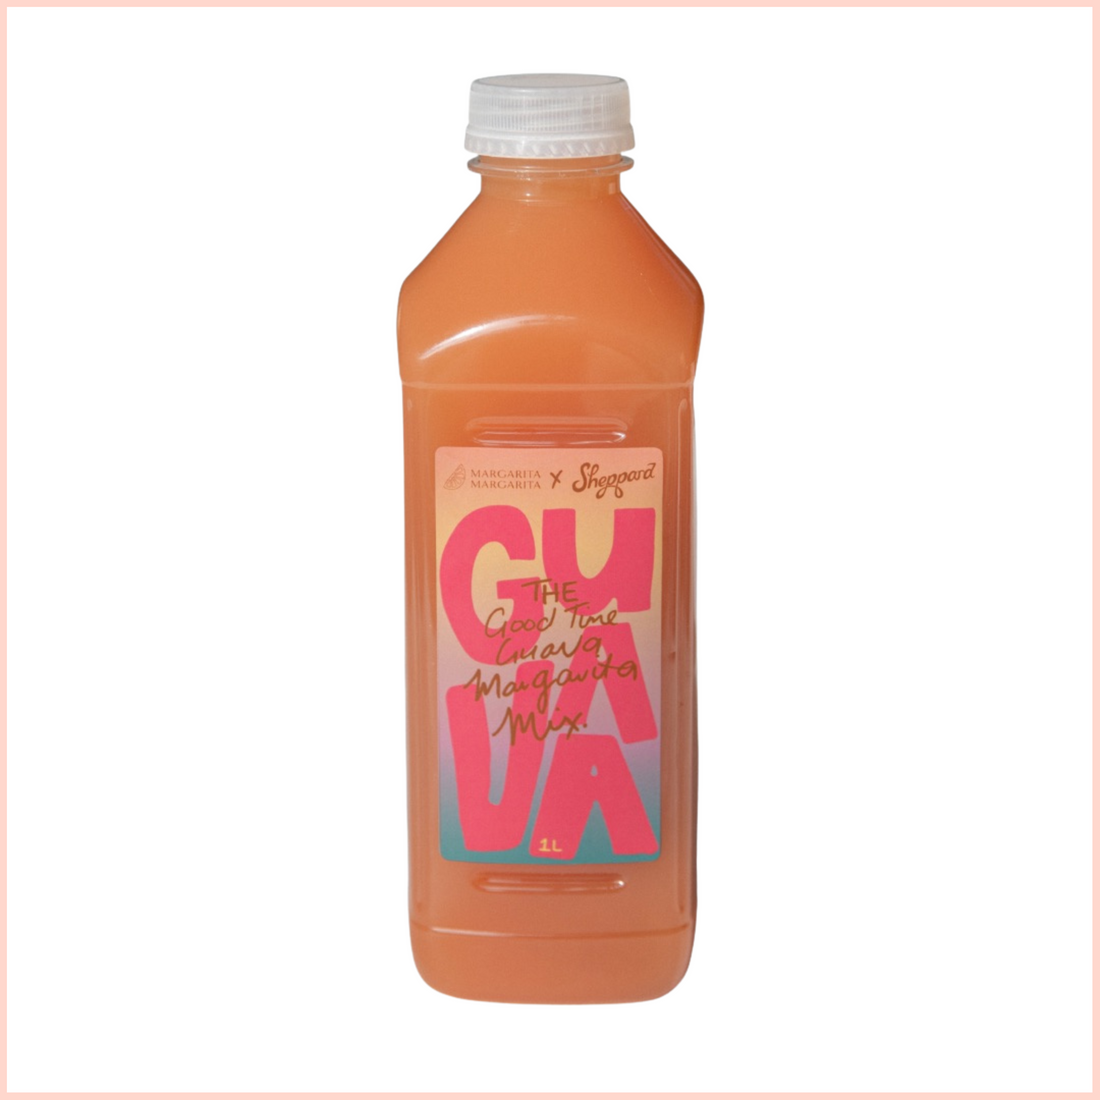 The Good Time Guava Margarita Mix 1L